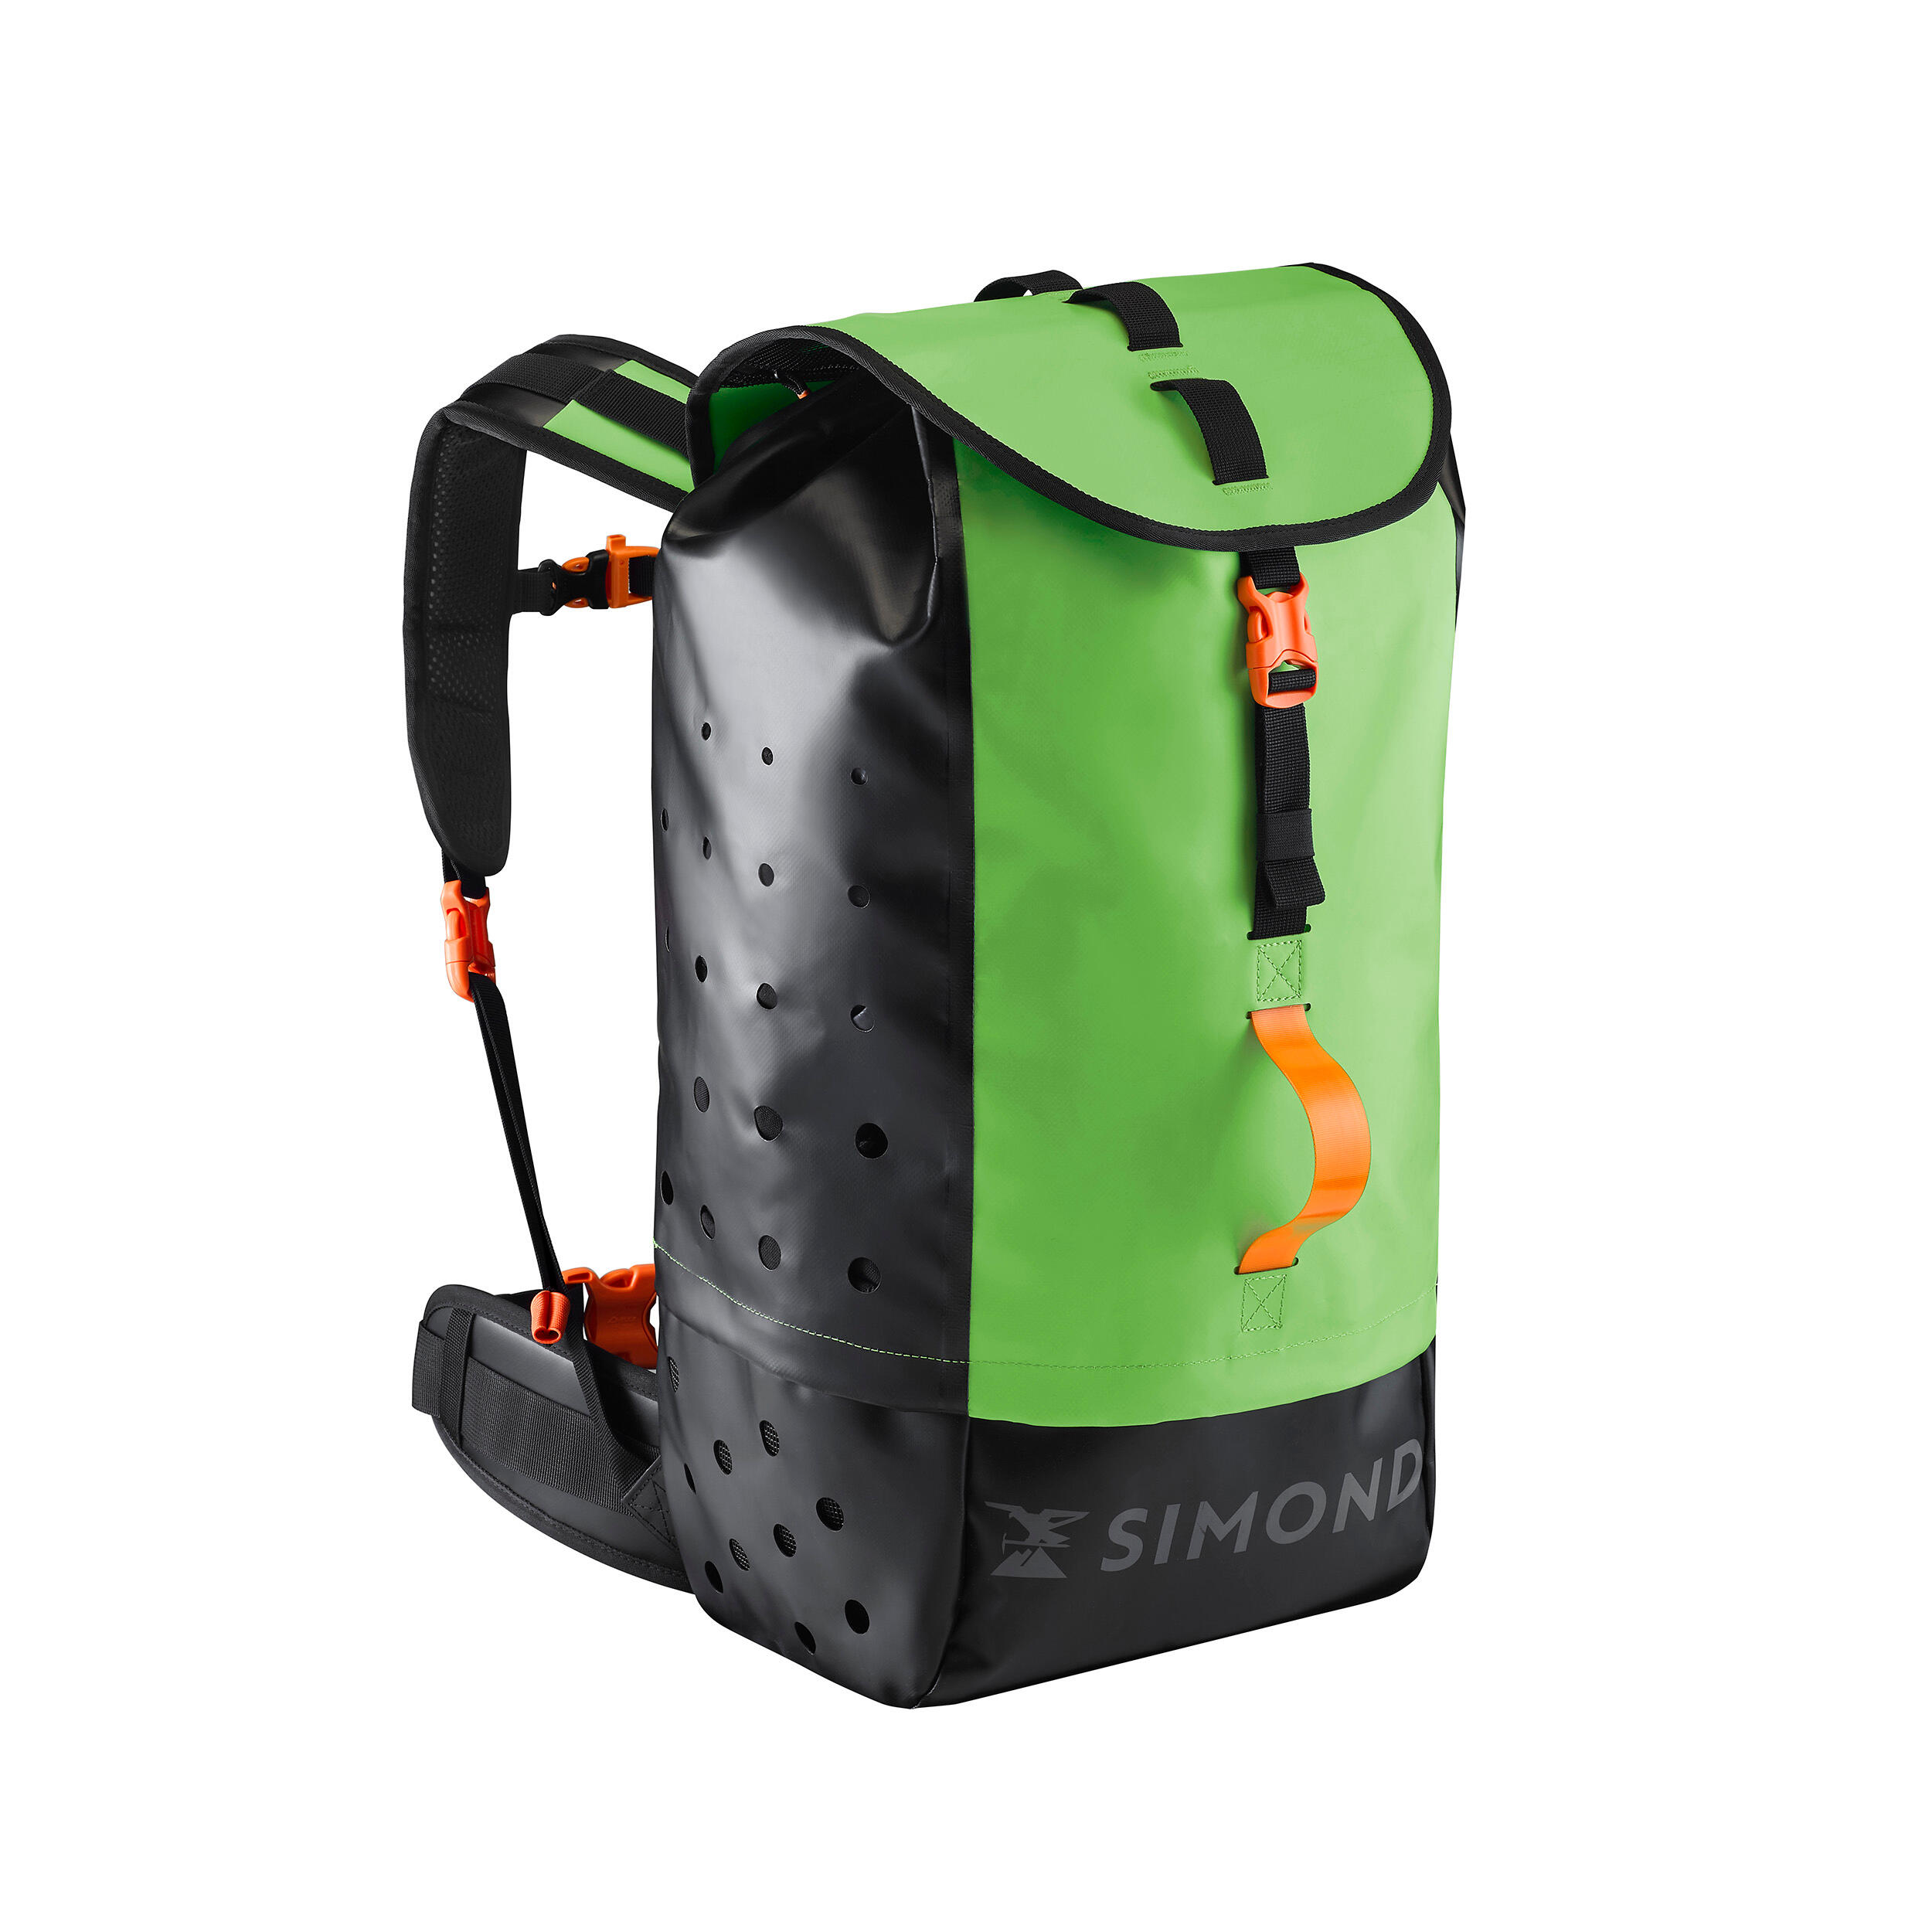 SIMOND Canyoning backpack 35L - MK 900